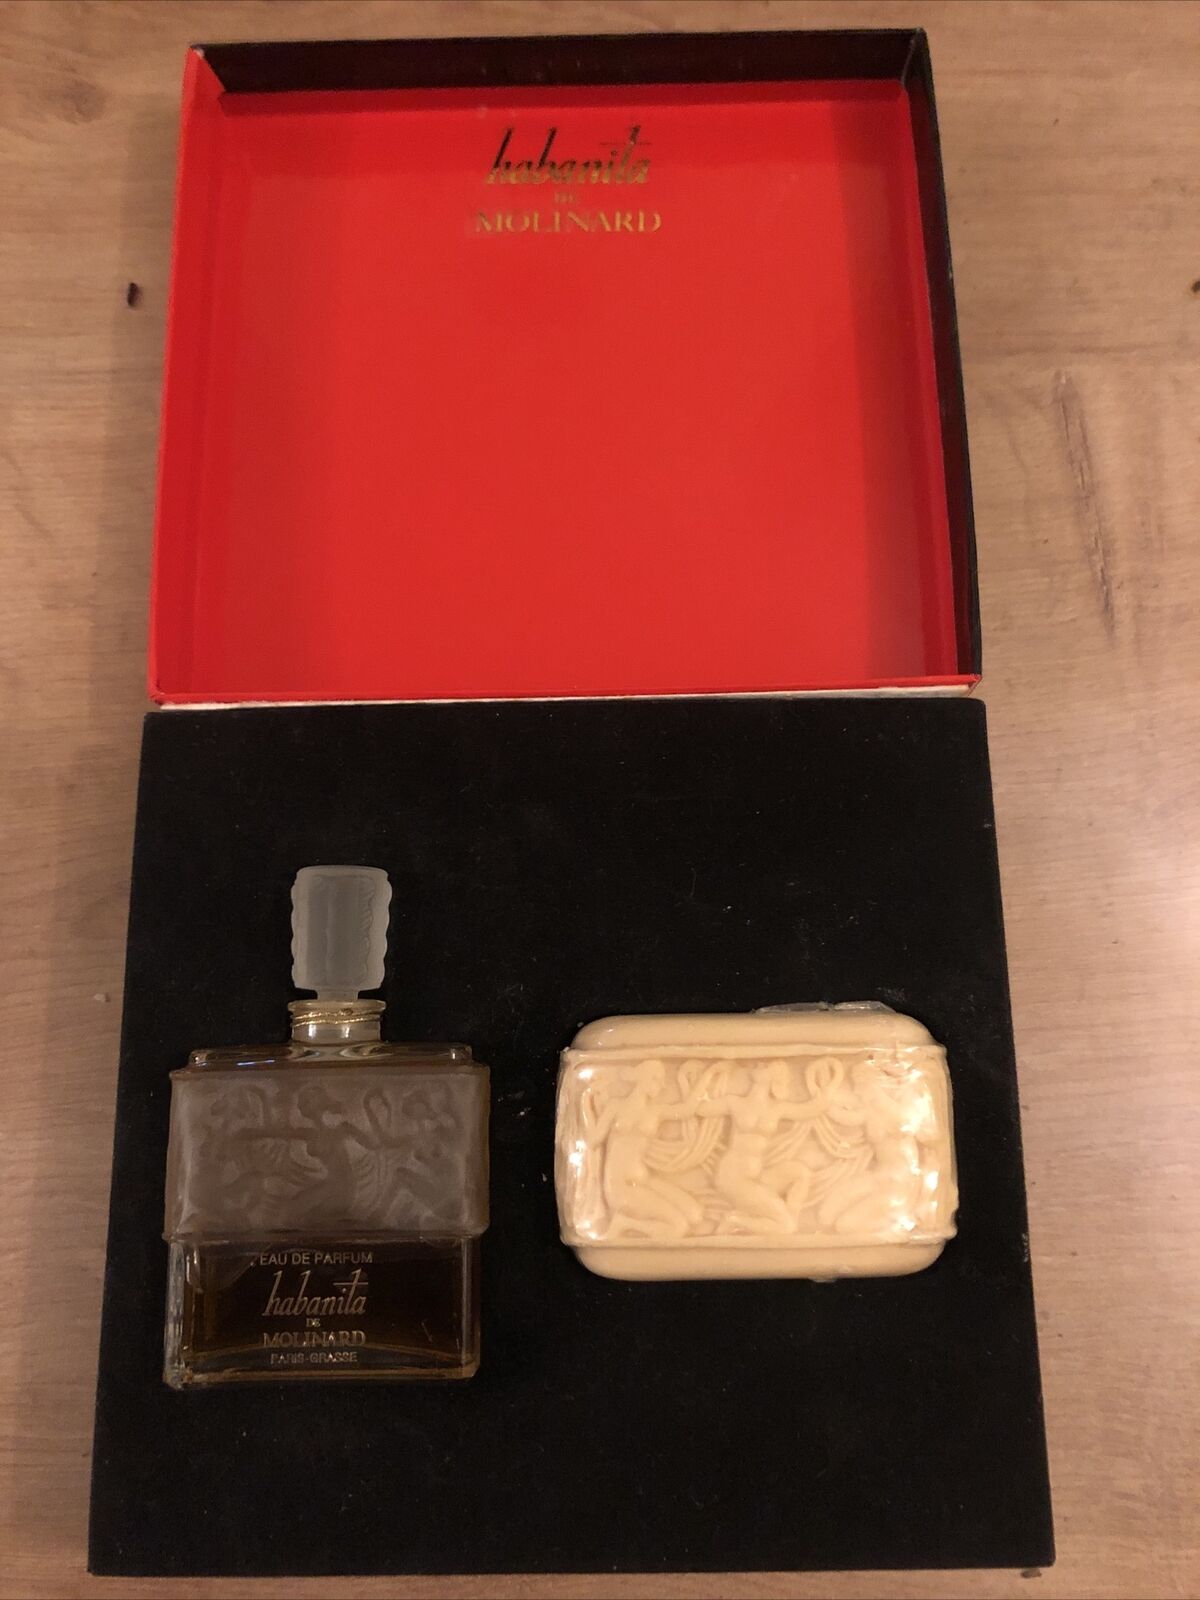 Real perfume Molinard Lalique Habanita bottle 30ml1 soap + sculpted women Lalique